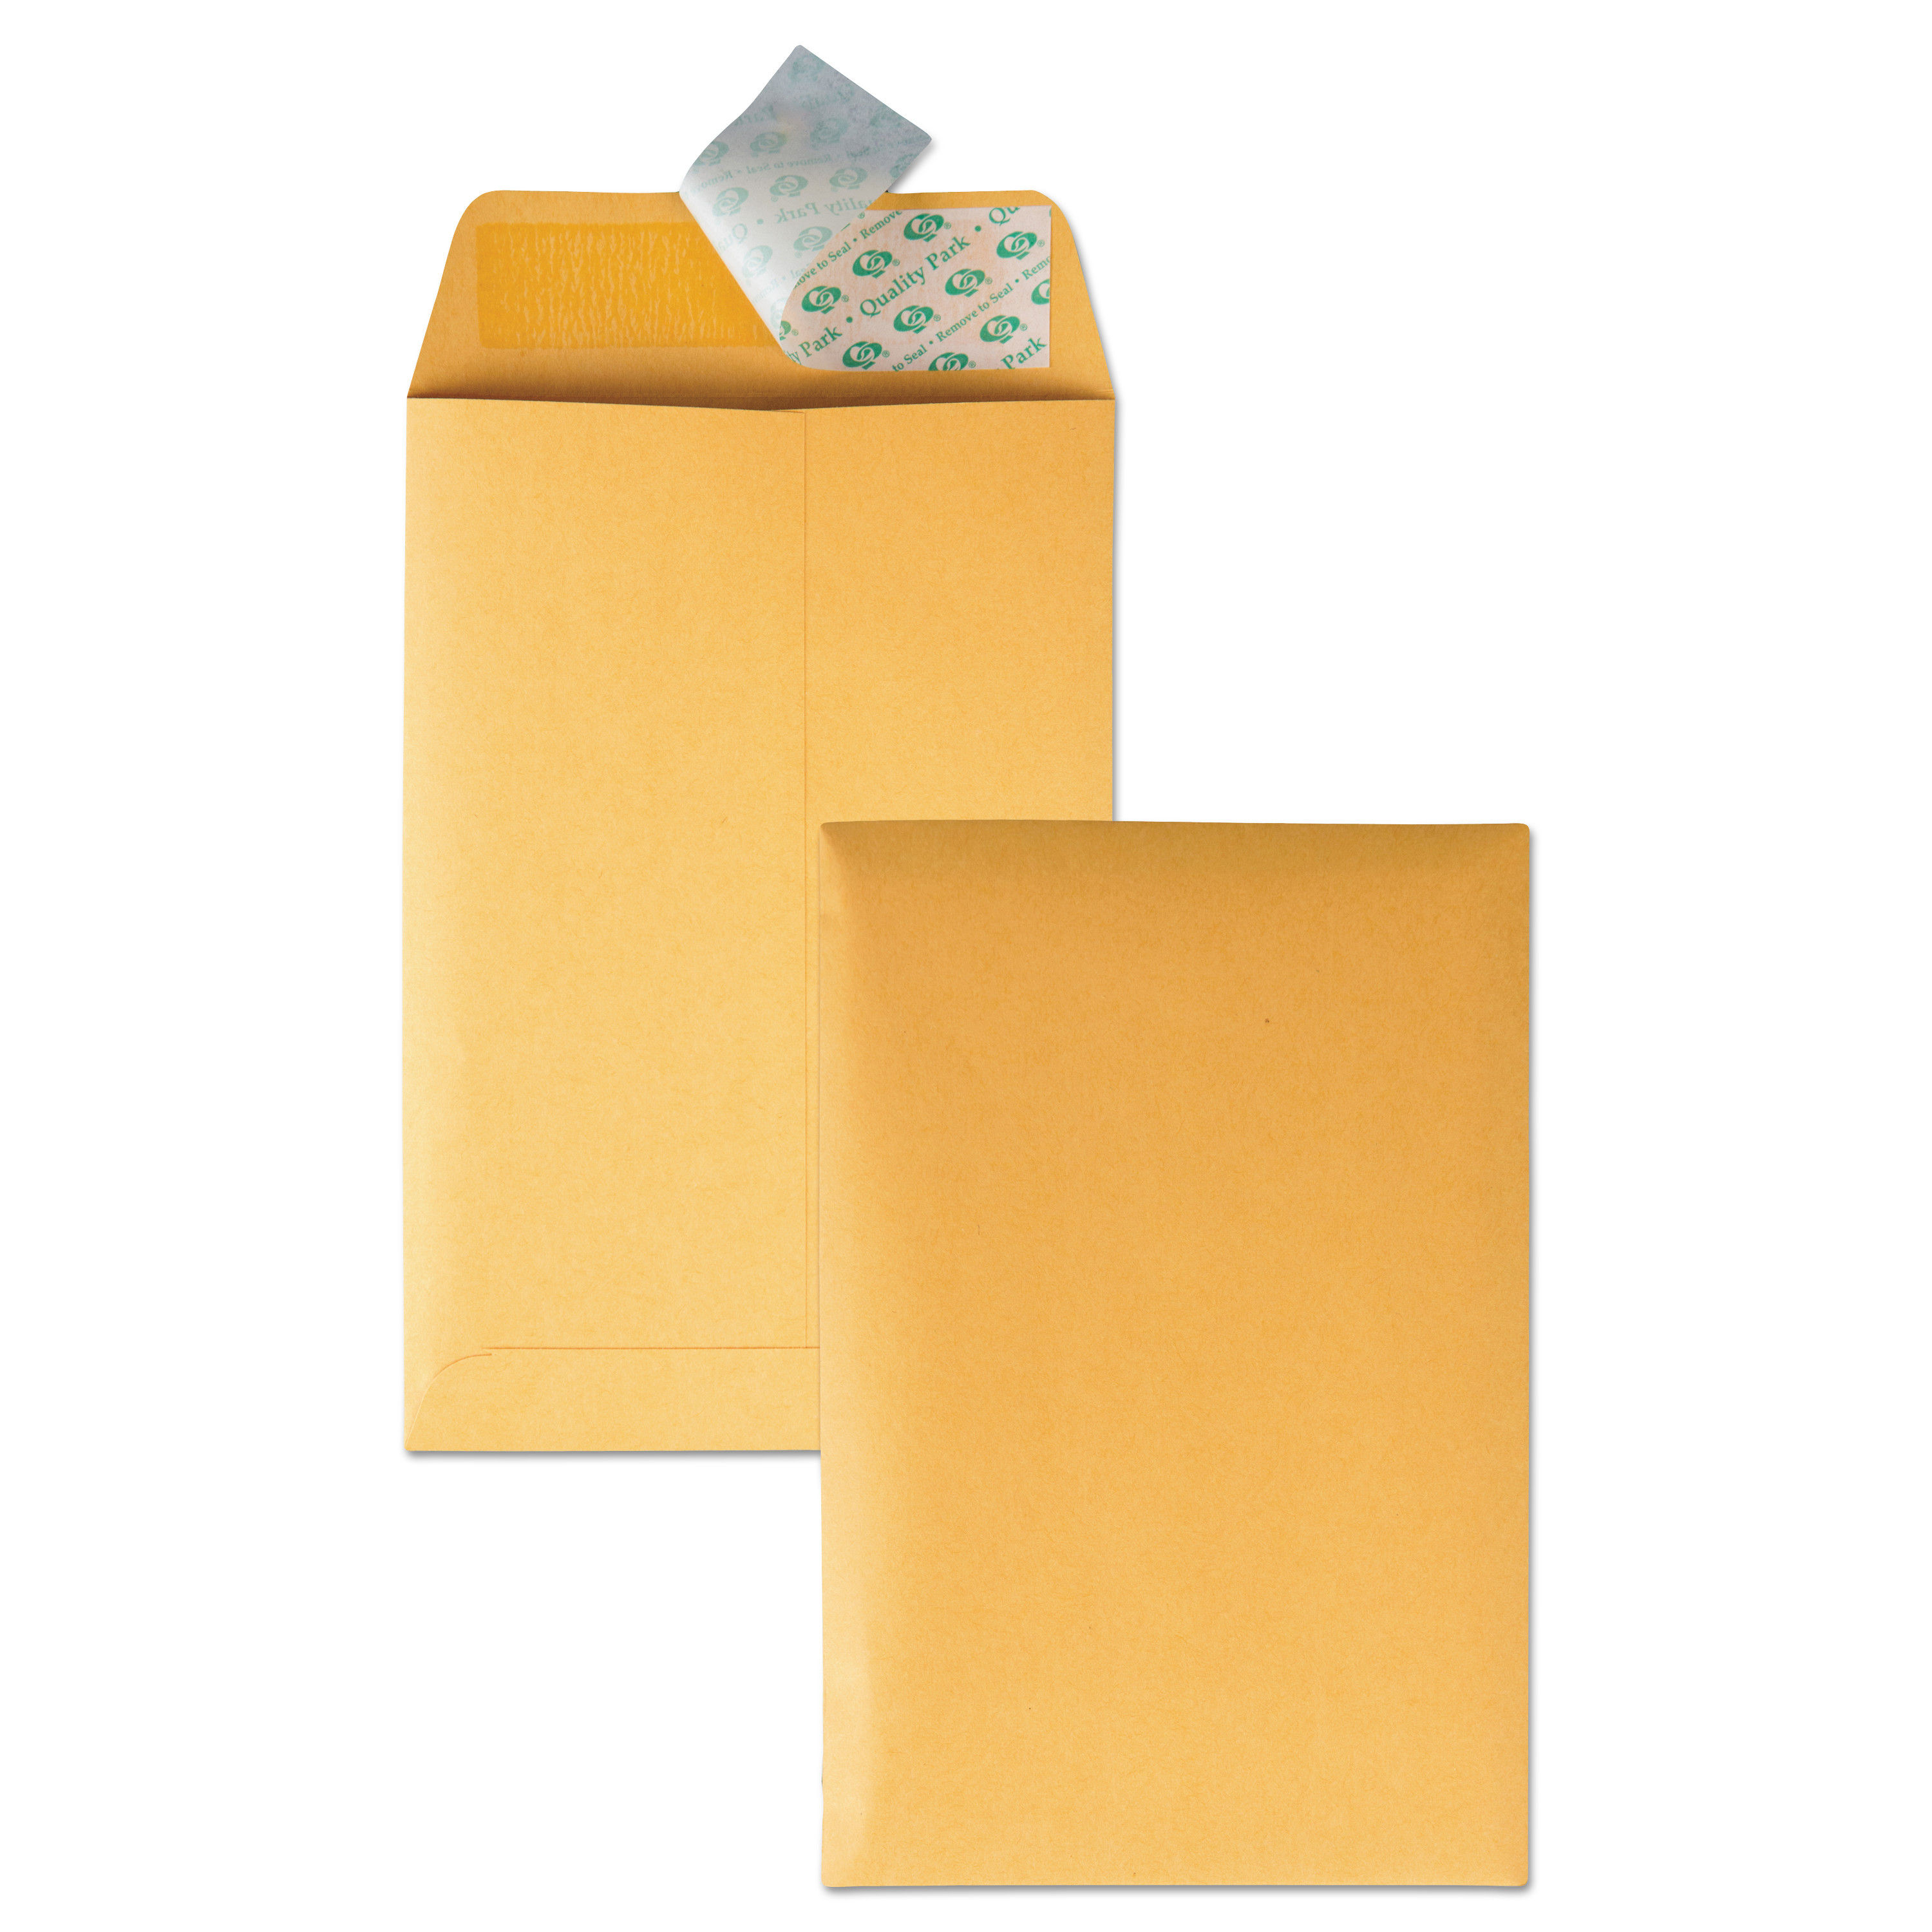  Quality Park QUA44162 Redi-Strip Catalog Envelope, #1, Cheese Blade Flap, Redi-Strip Closure, 6 x 9, Brown Kraft, 100/Box (QUA44162) 